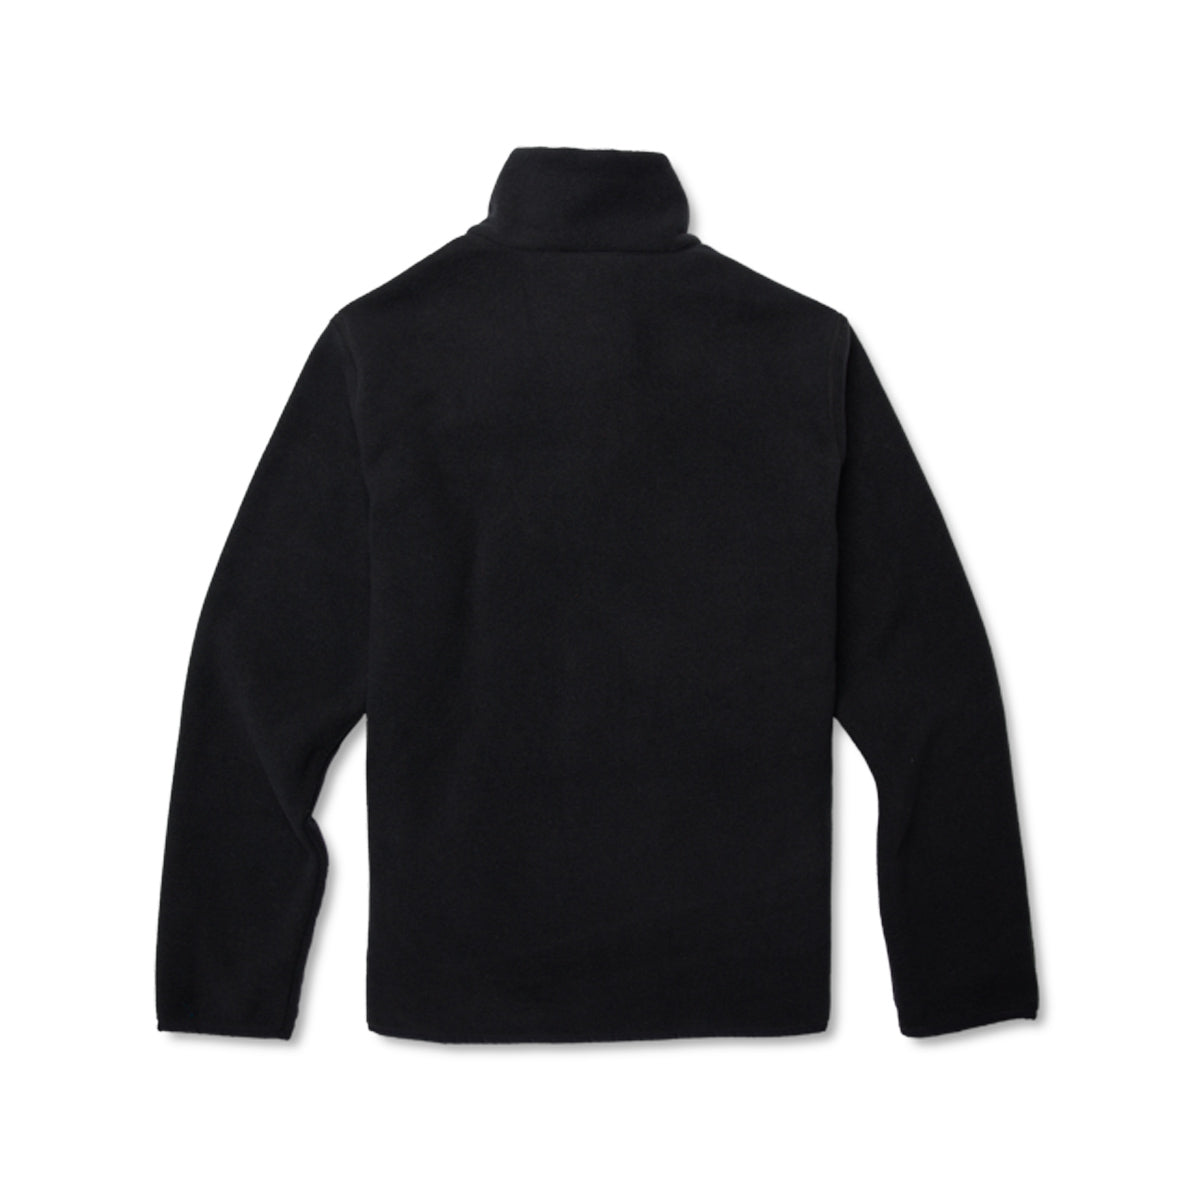 Cotopaxi Teca Fleece Full-Zip Jacket - MENS コトパクシ テッカ フリース フルジップ ジャケット メンズ